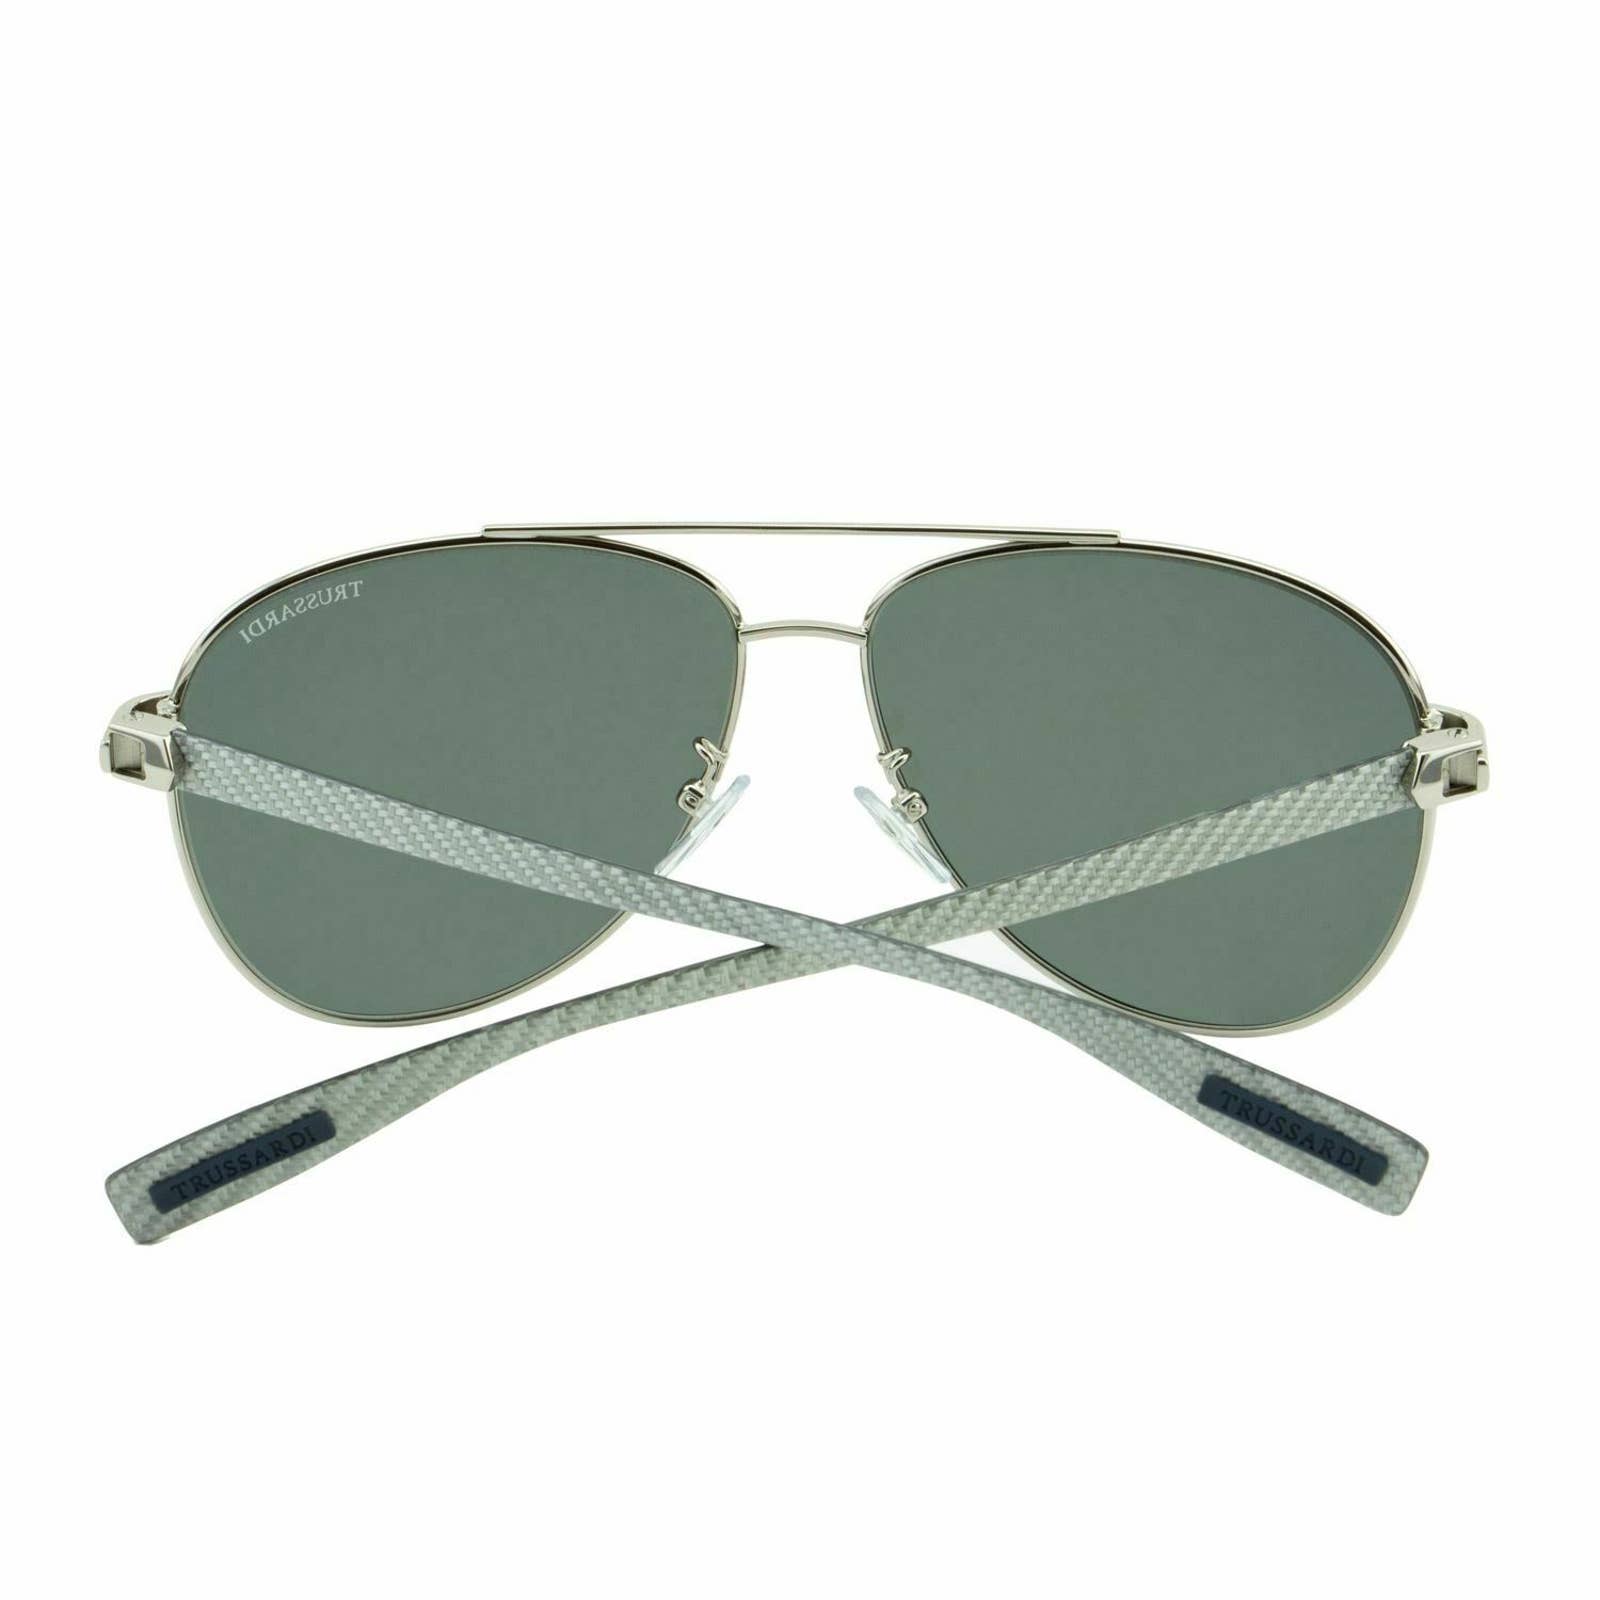 Men Silver Blue Aviator Sunglasses STR-175-579B